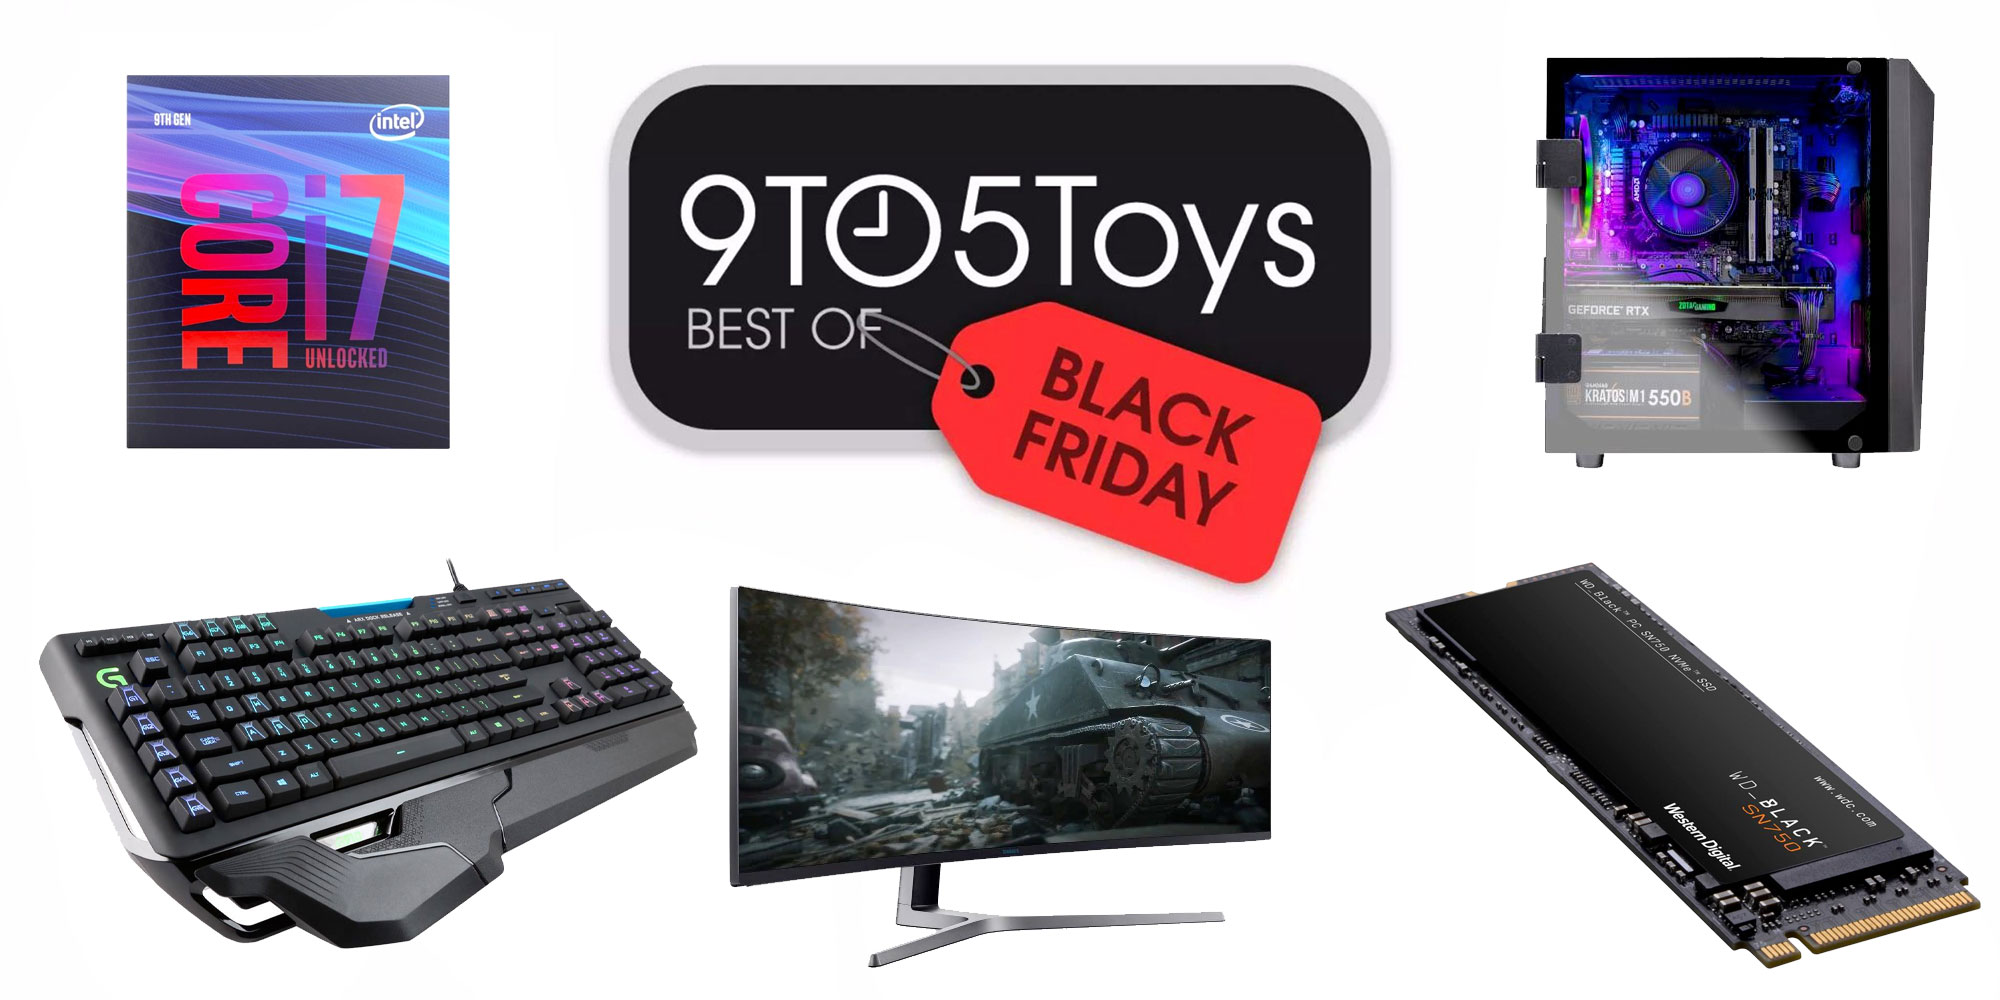 Bloedbad Hiel Verandert in Black Friday PC Gaming deals include CPUs, monitors, more - 9to5Toys